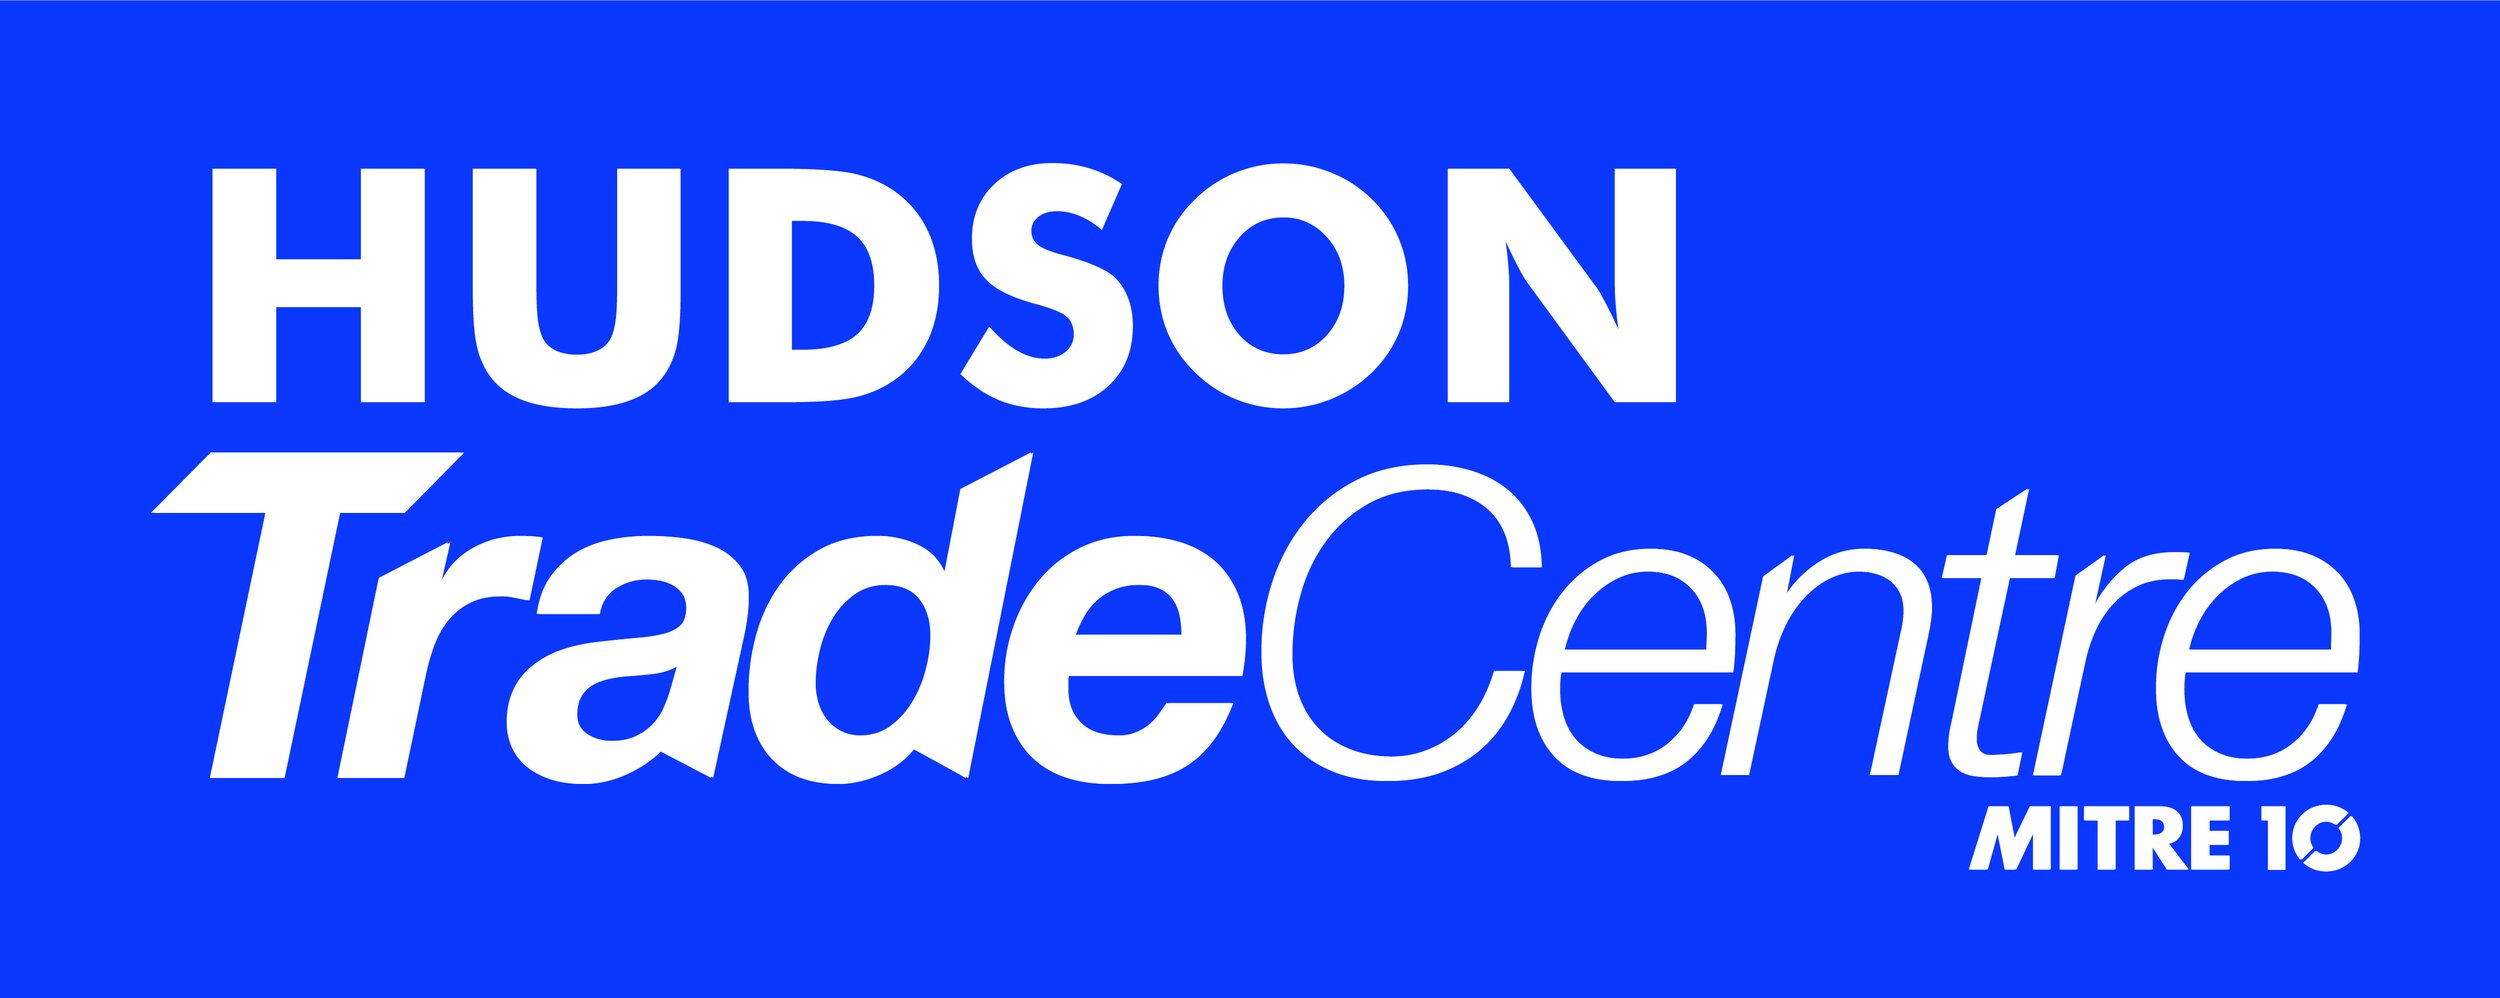 HUDSON TRADECENTRE STACKED_BLUE (1).jpg